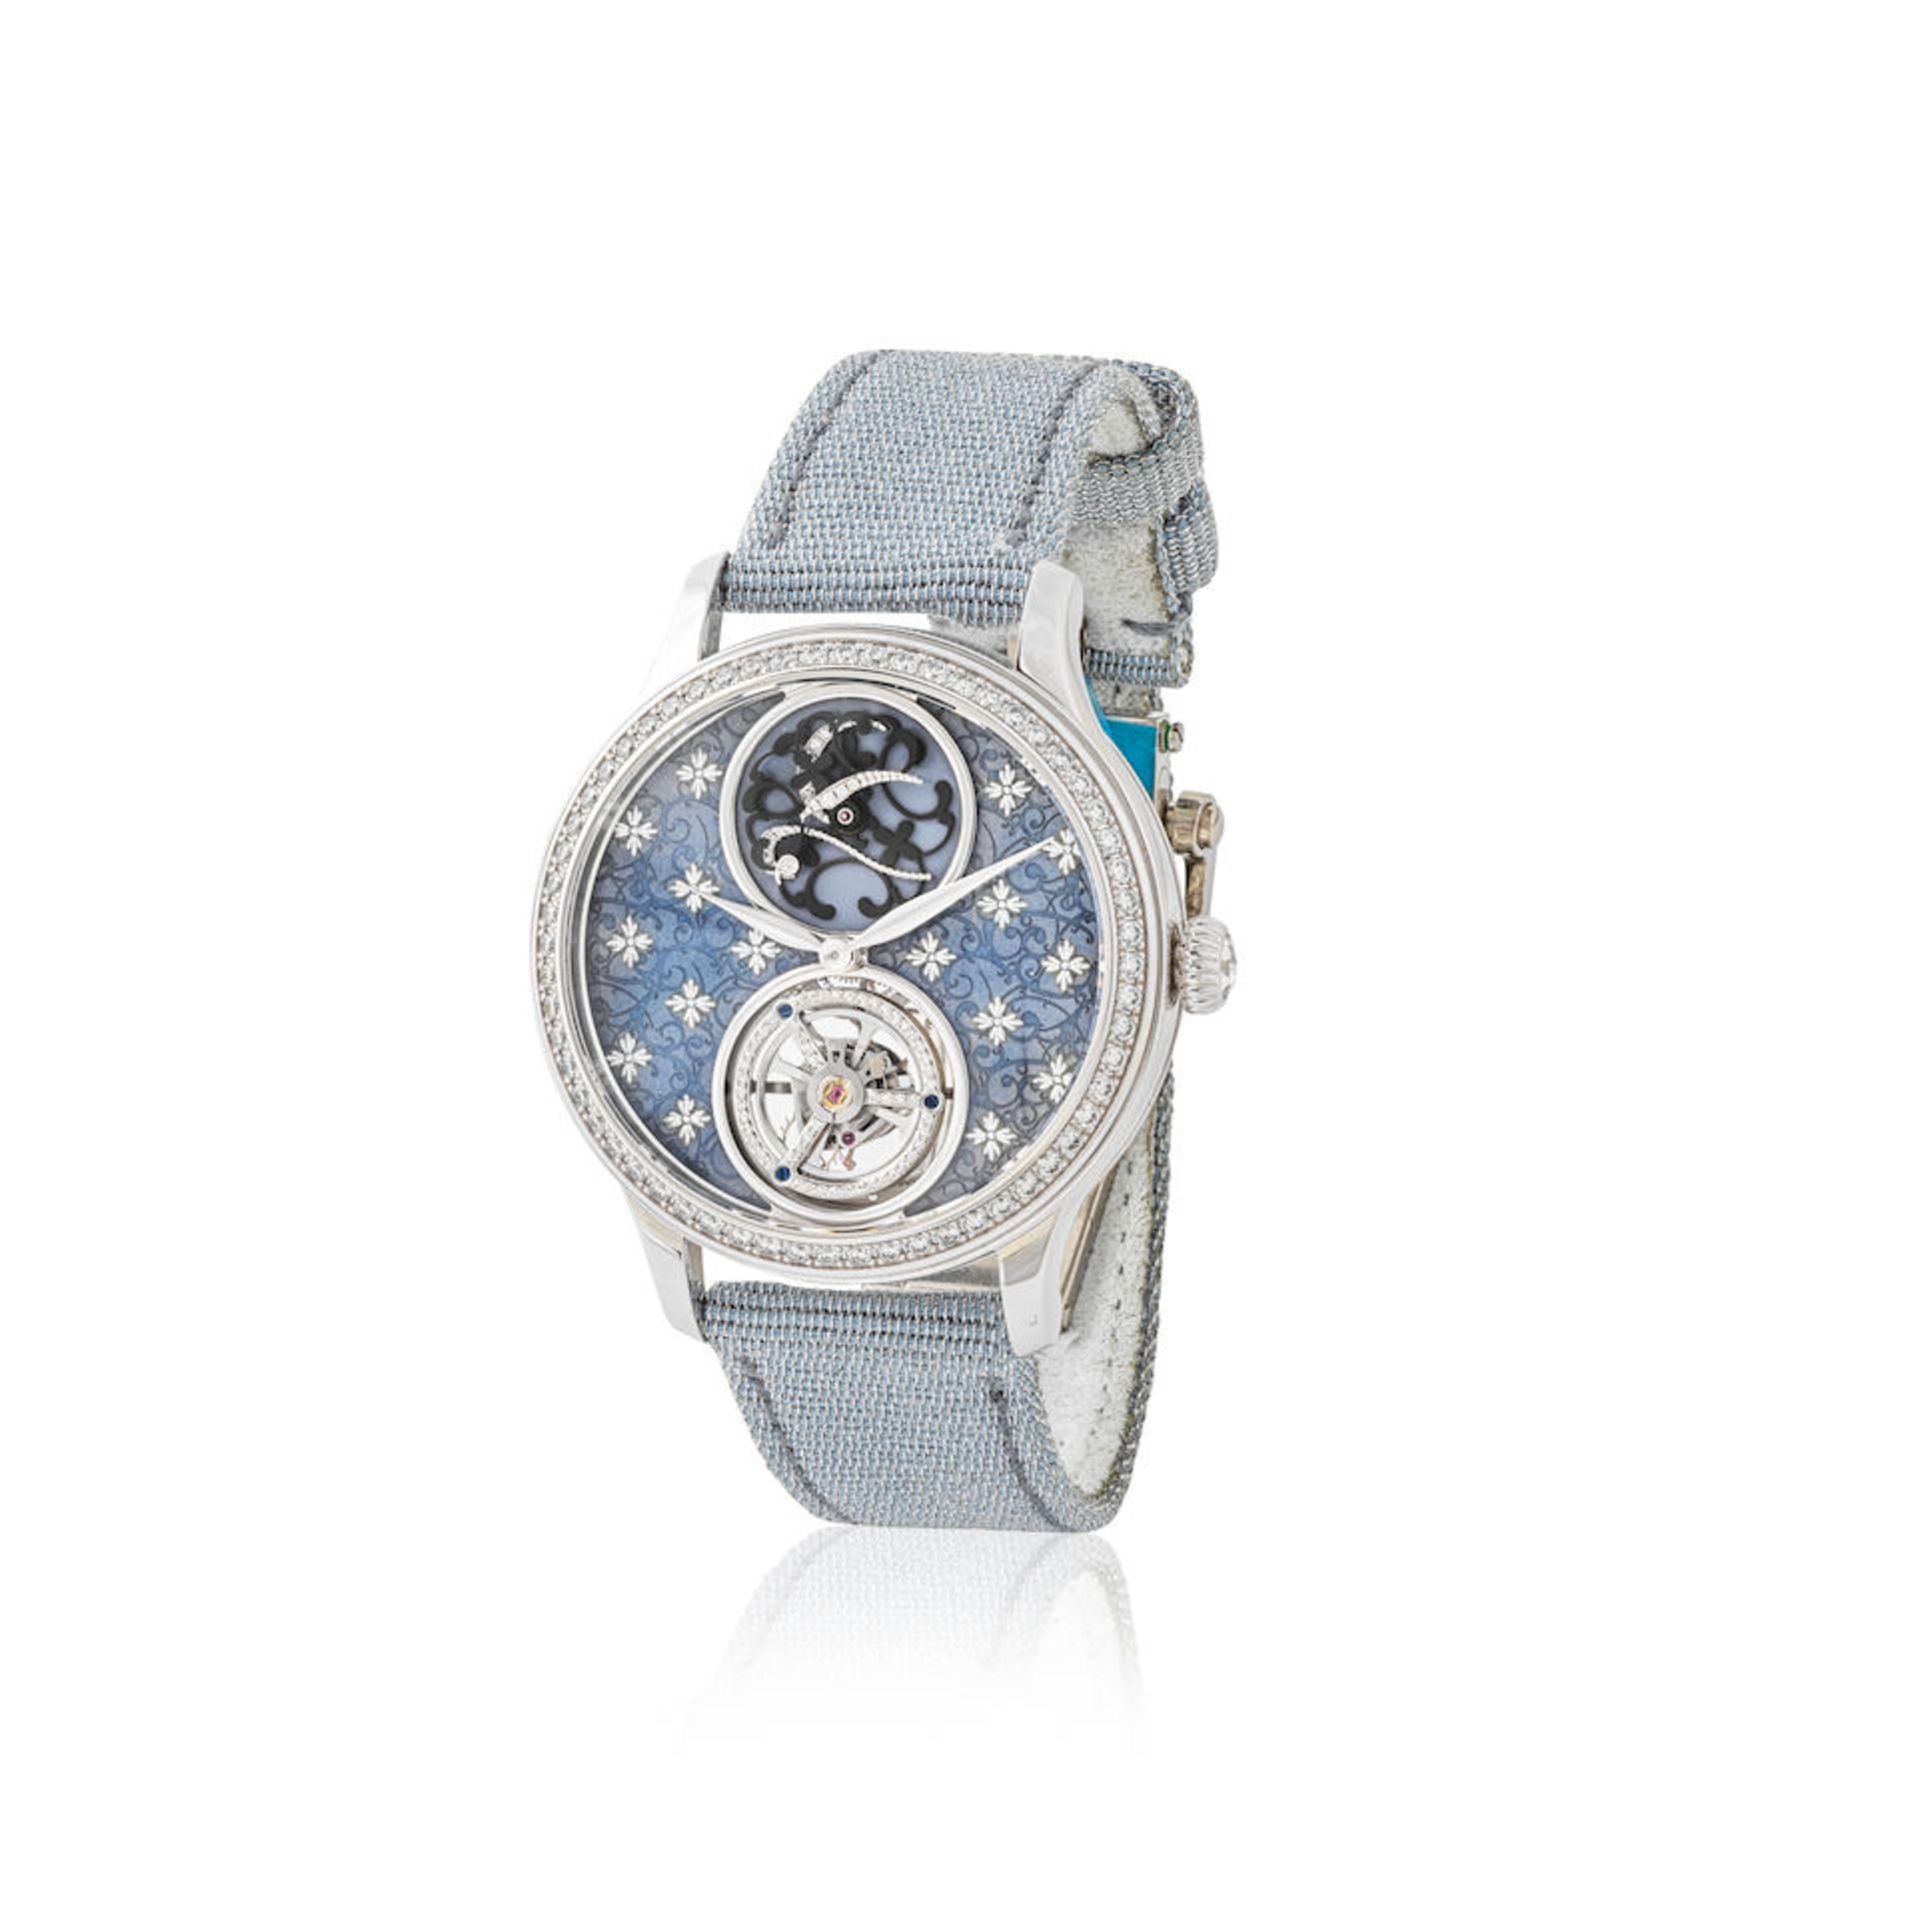 Charles Girardier. A fine and rare 18K white gold automatic tourbillon wristwatch with diamond s...